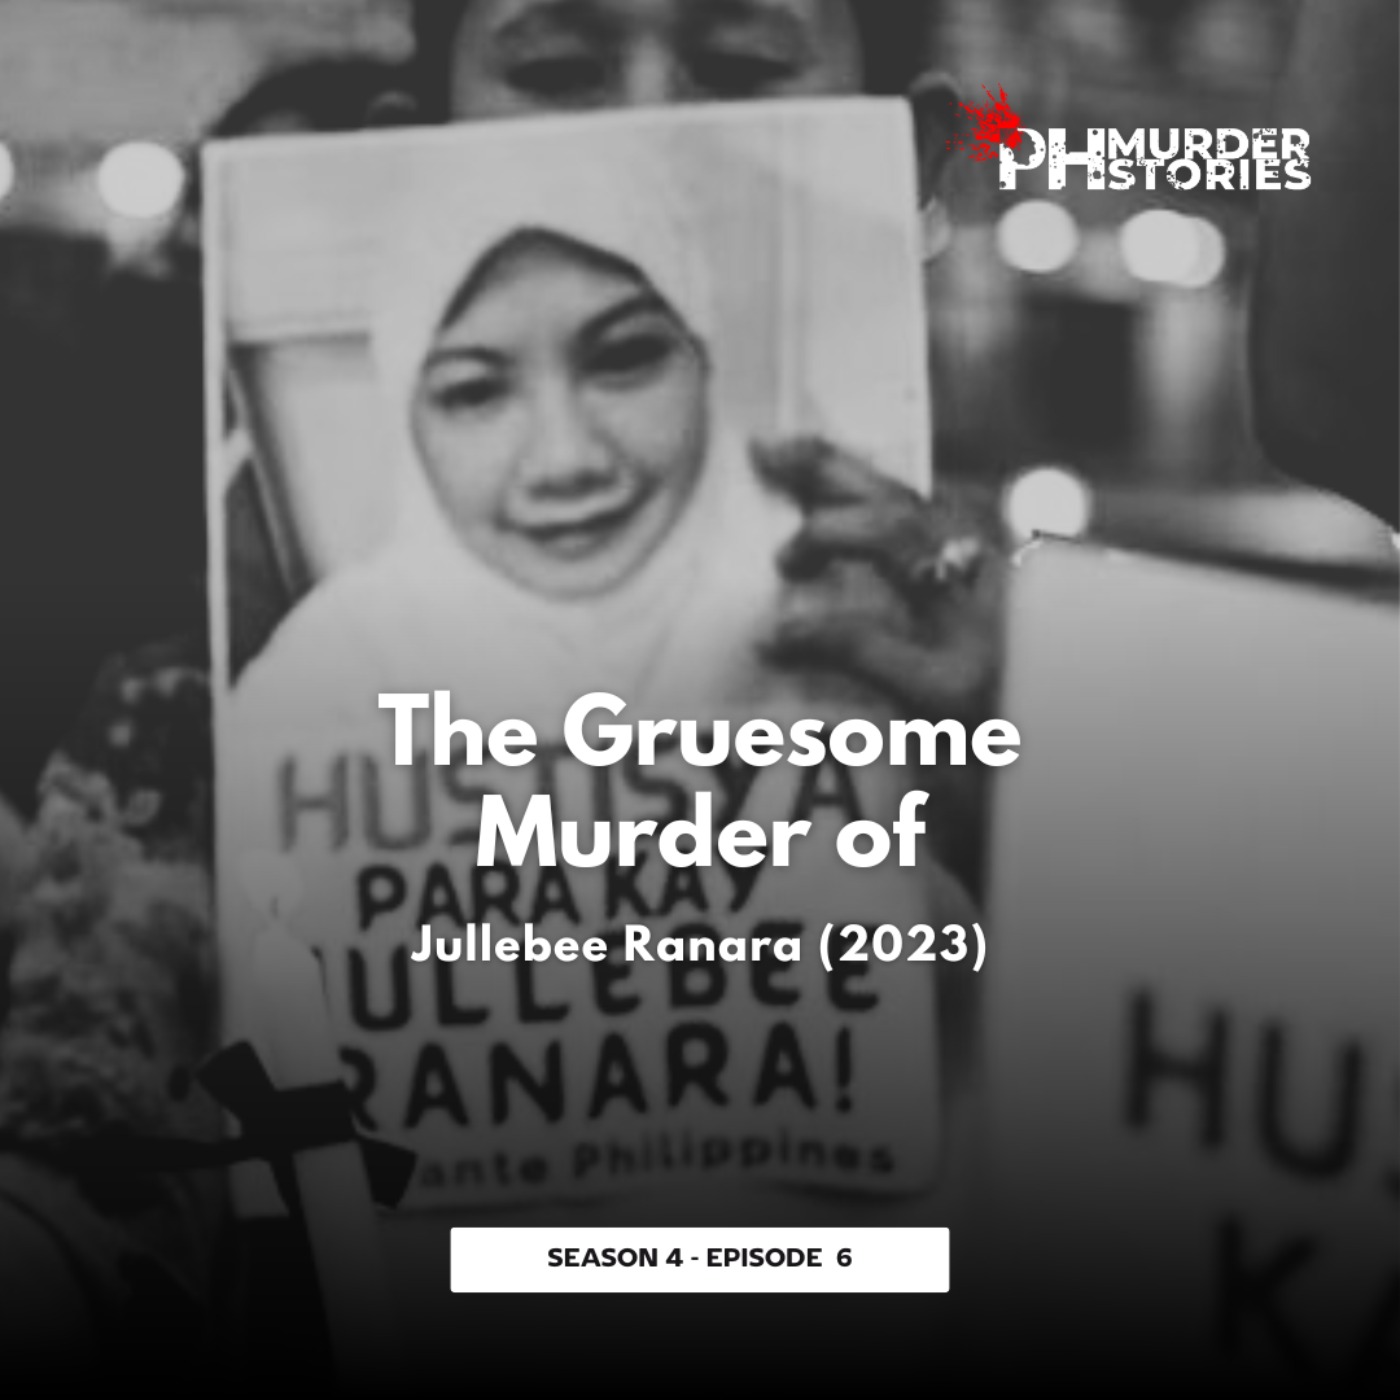 The Gruesome Murder of Jullebee Ranara in Kuwait (2023)